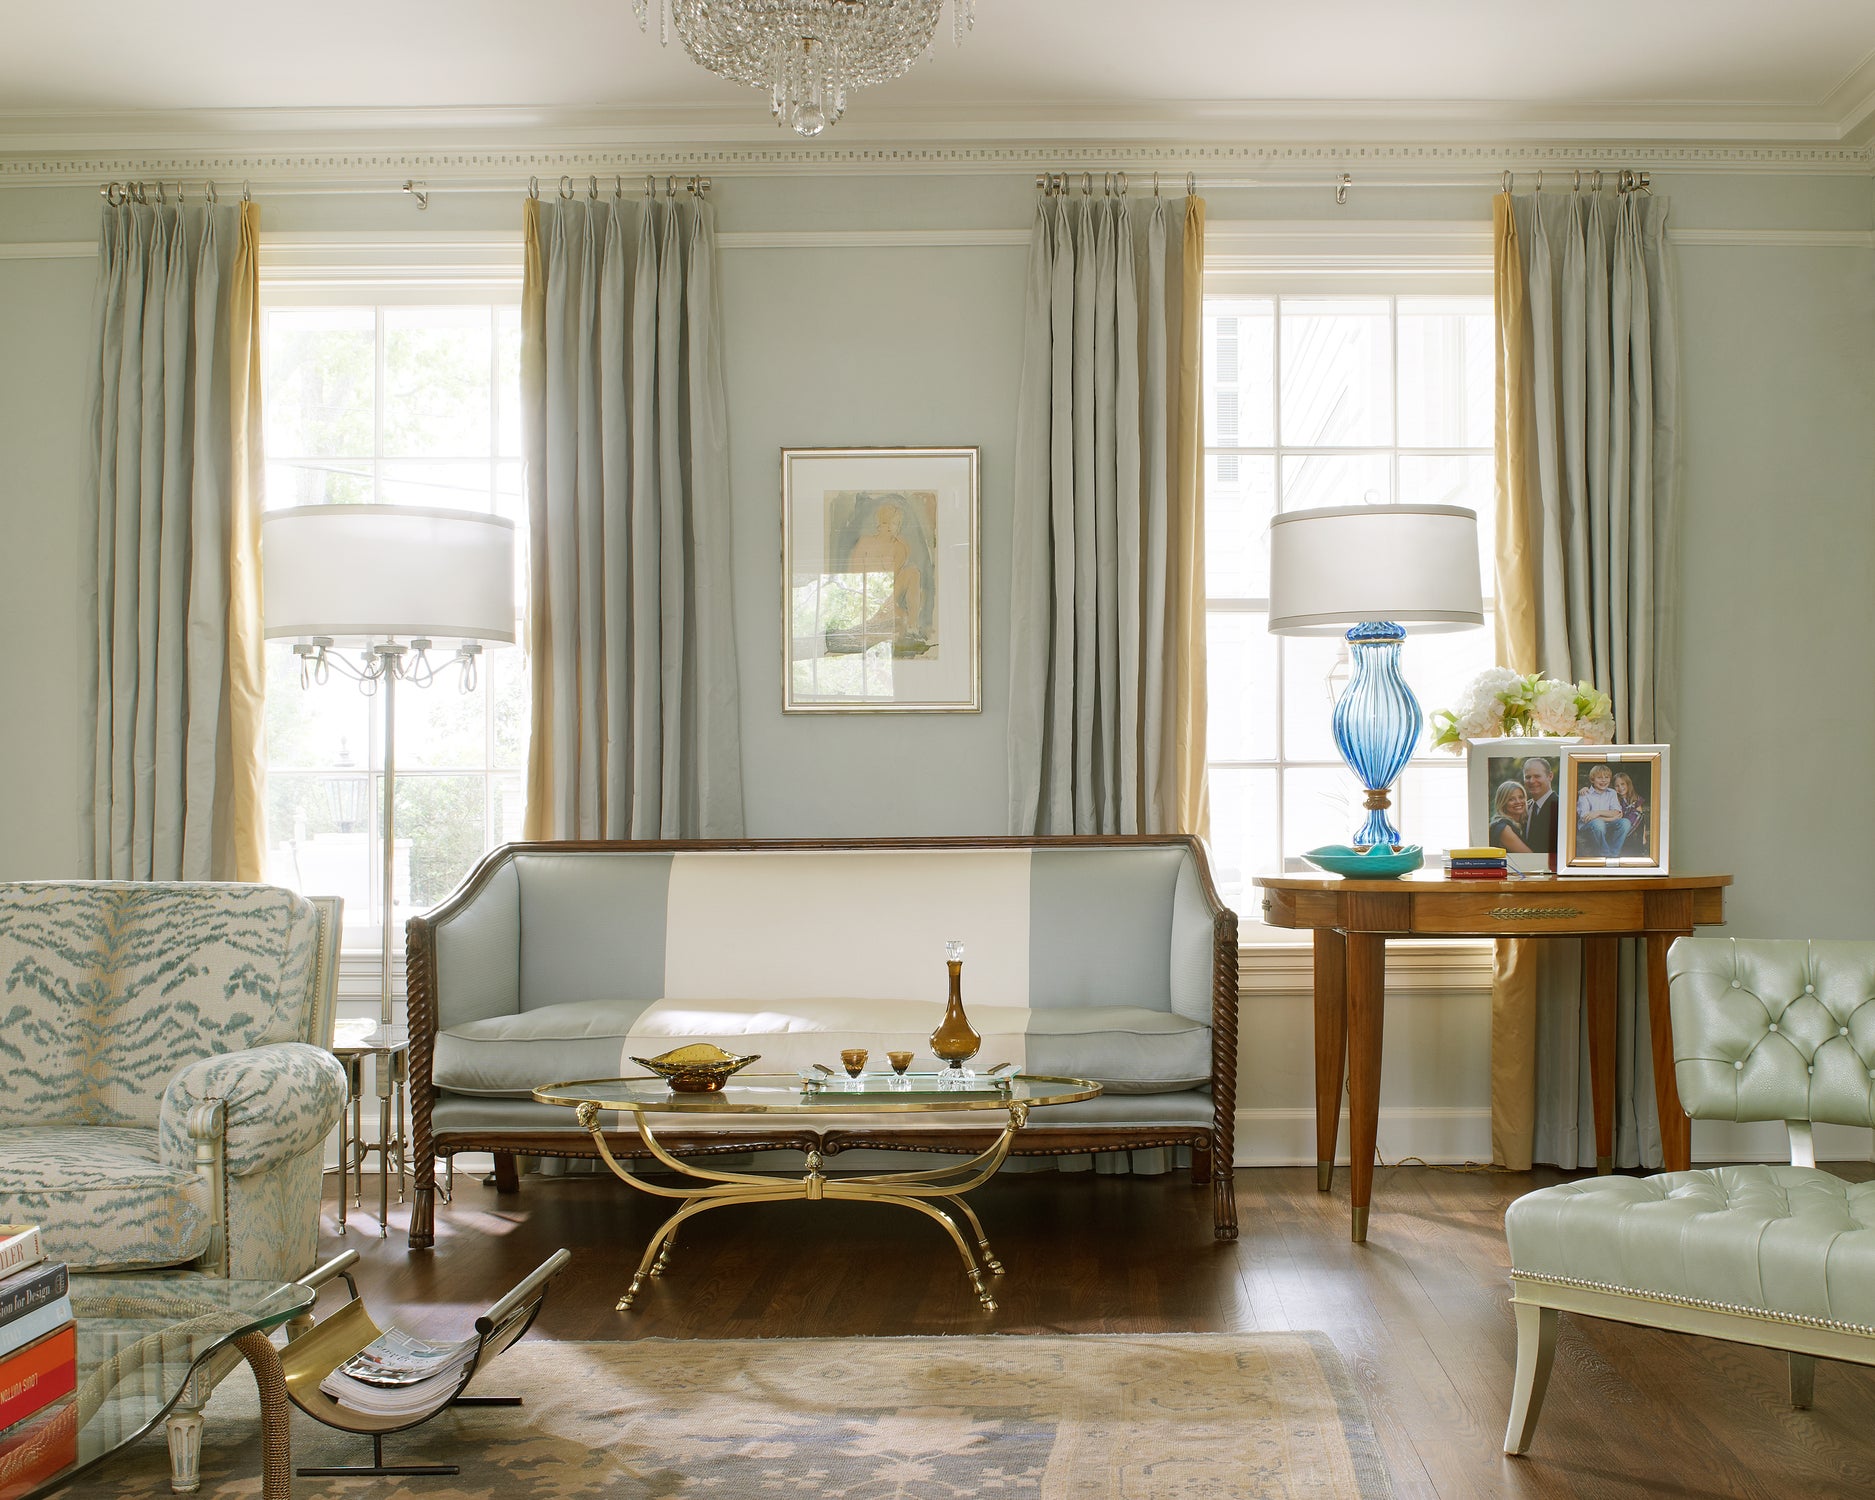 Living Room by Jan Showers & Associates on 1stdibs